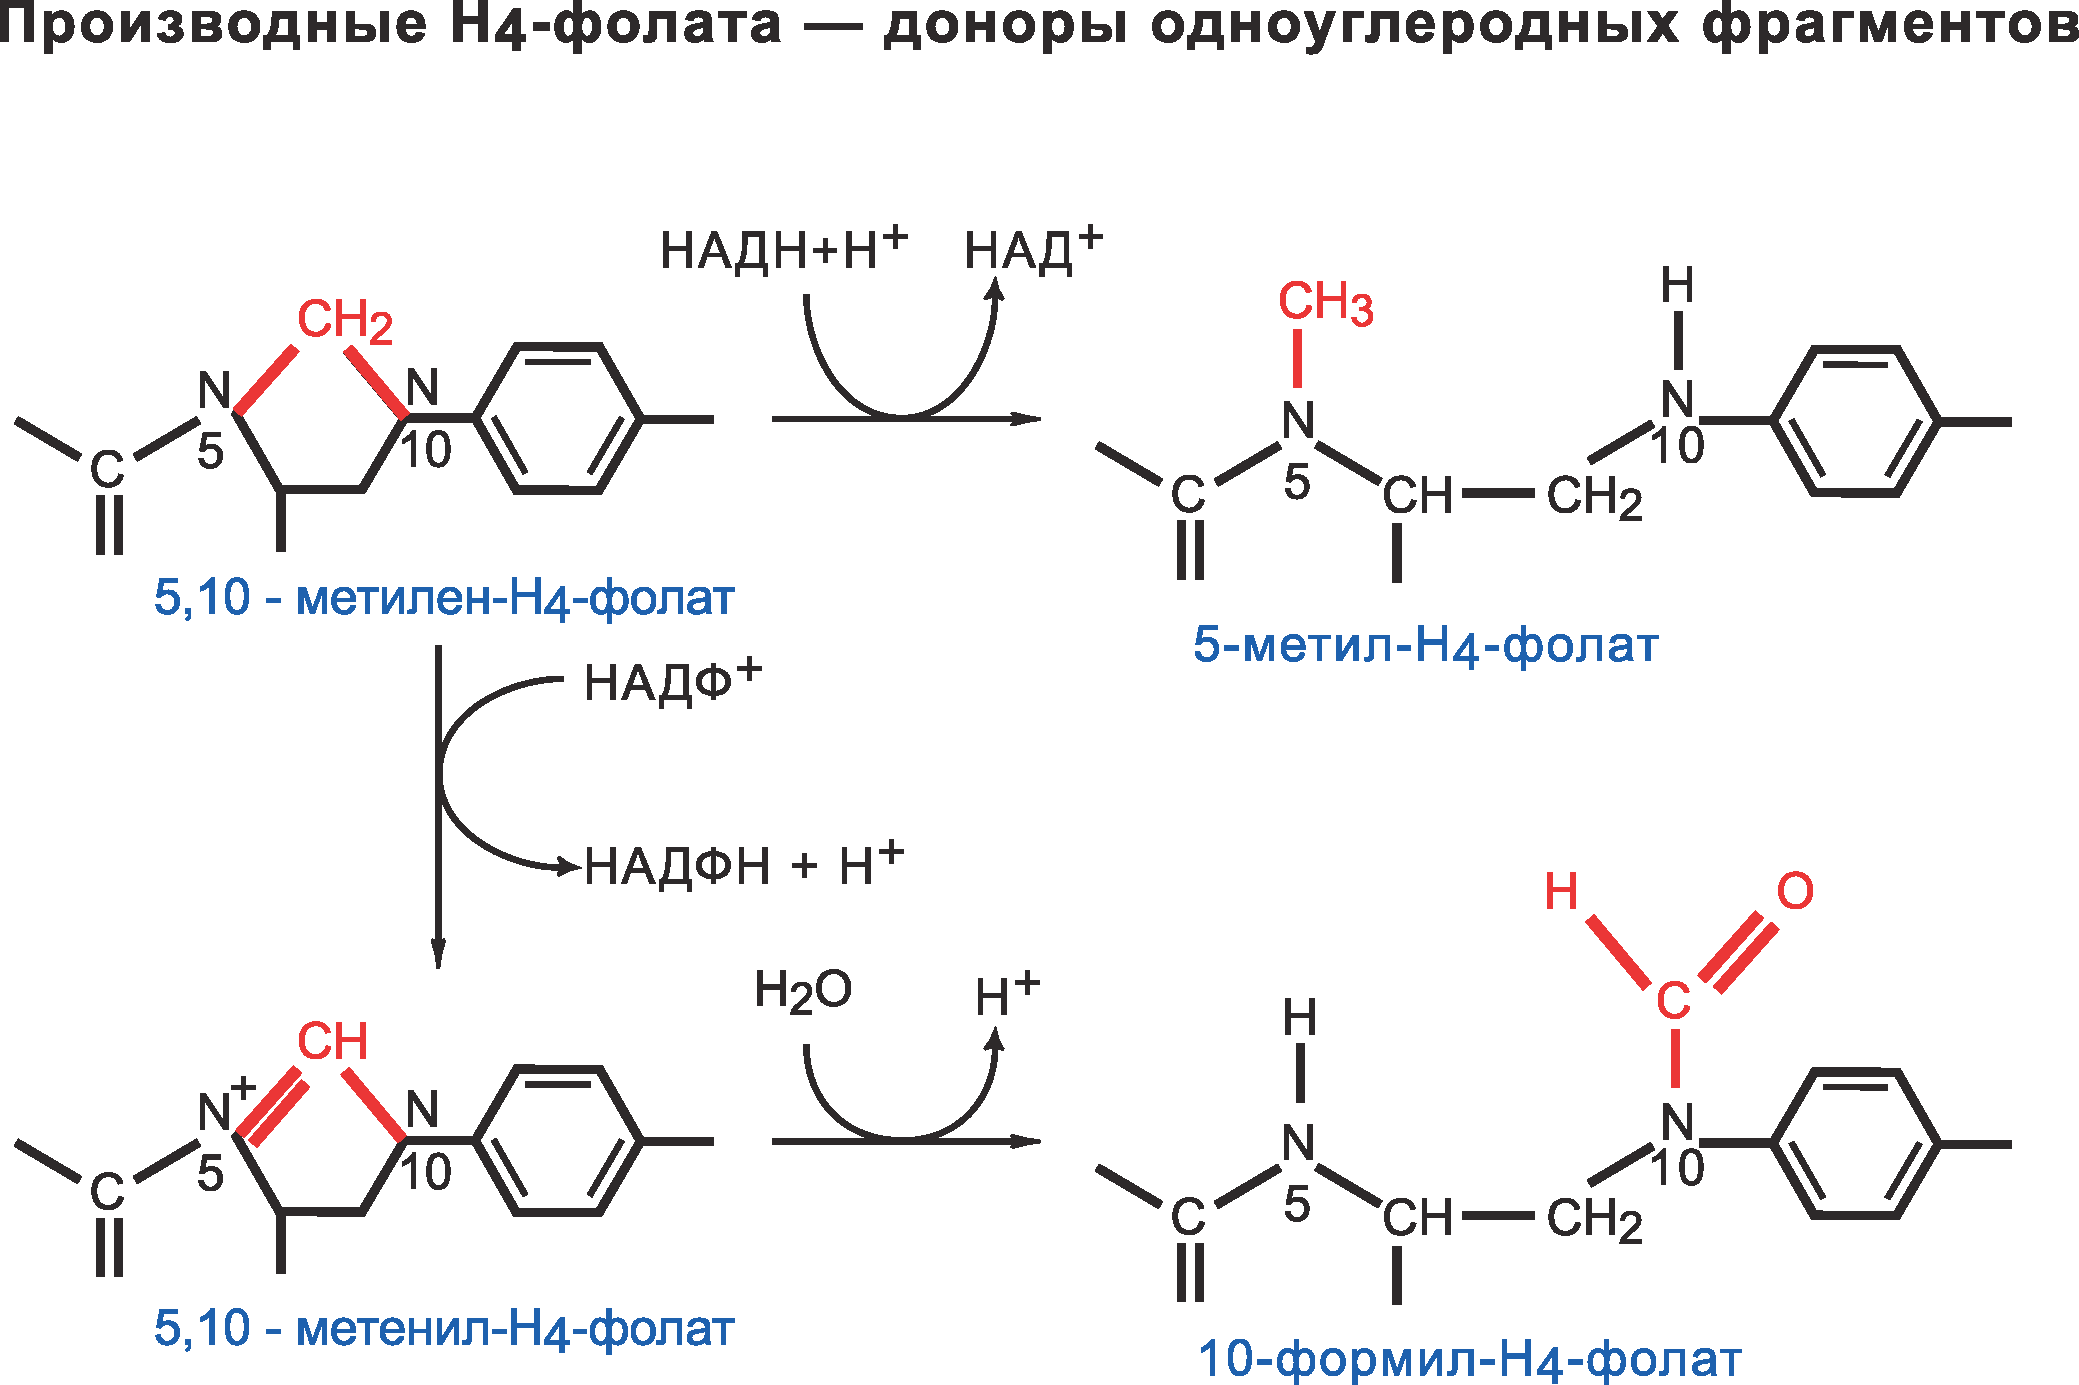 Синтез метилов